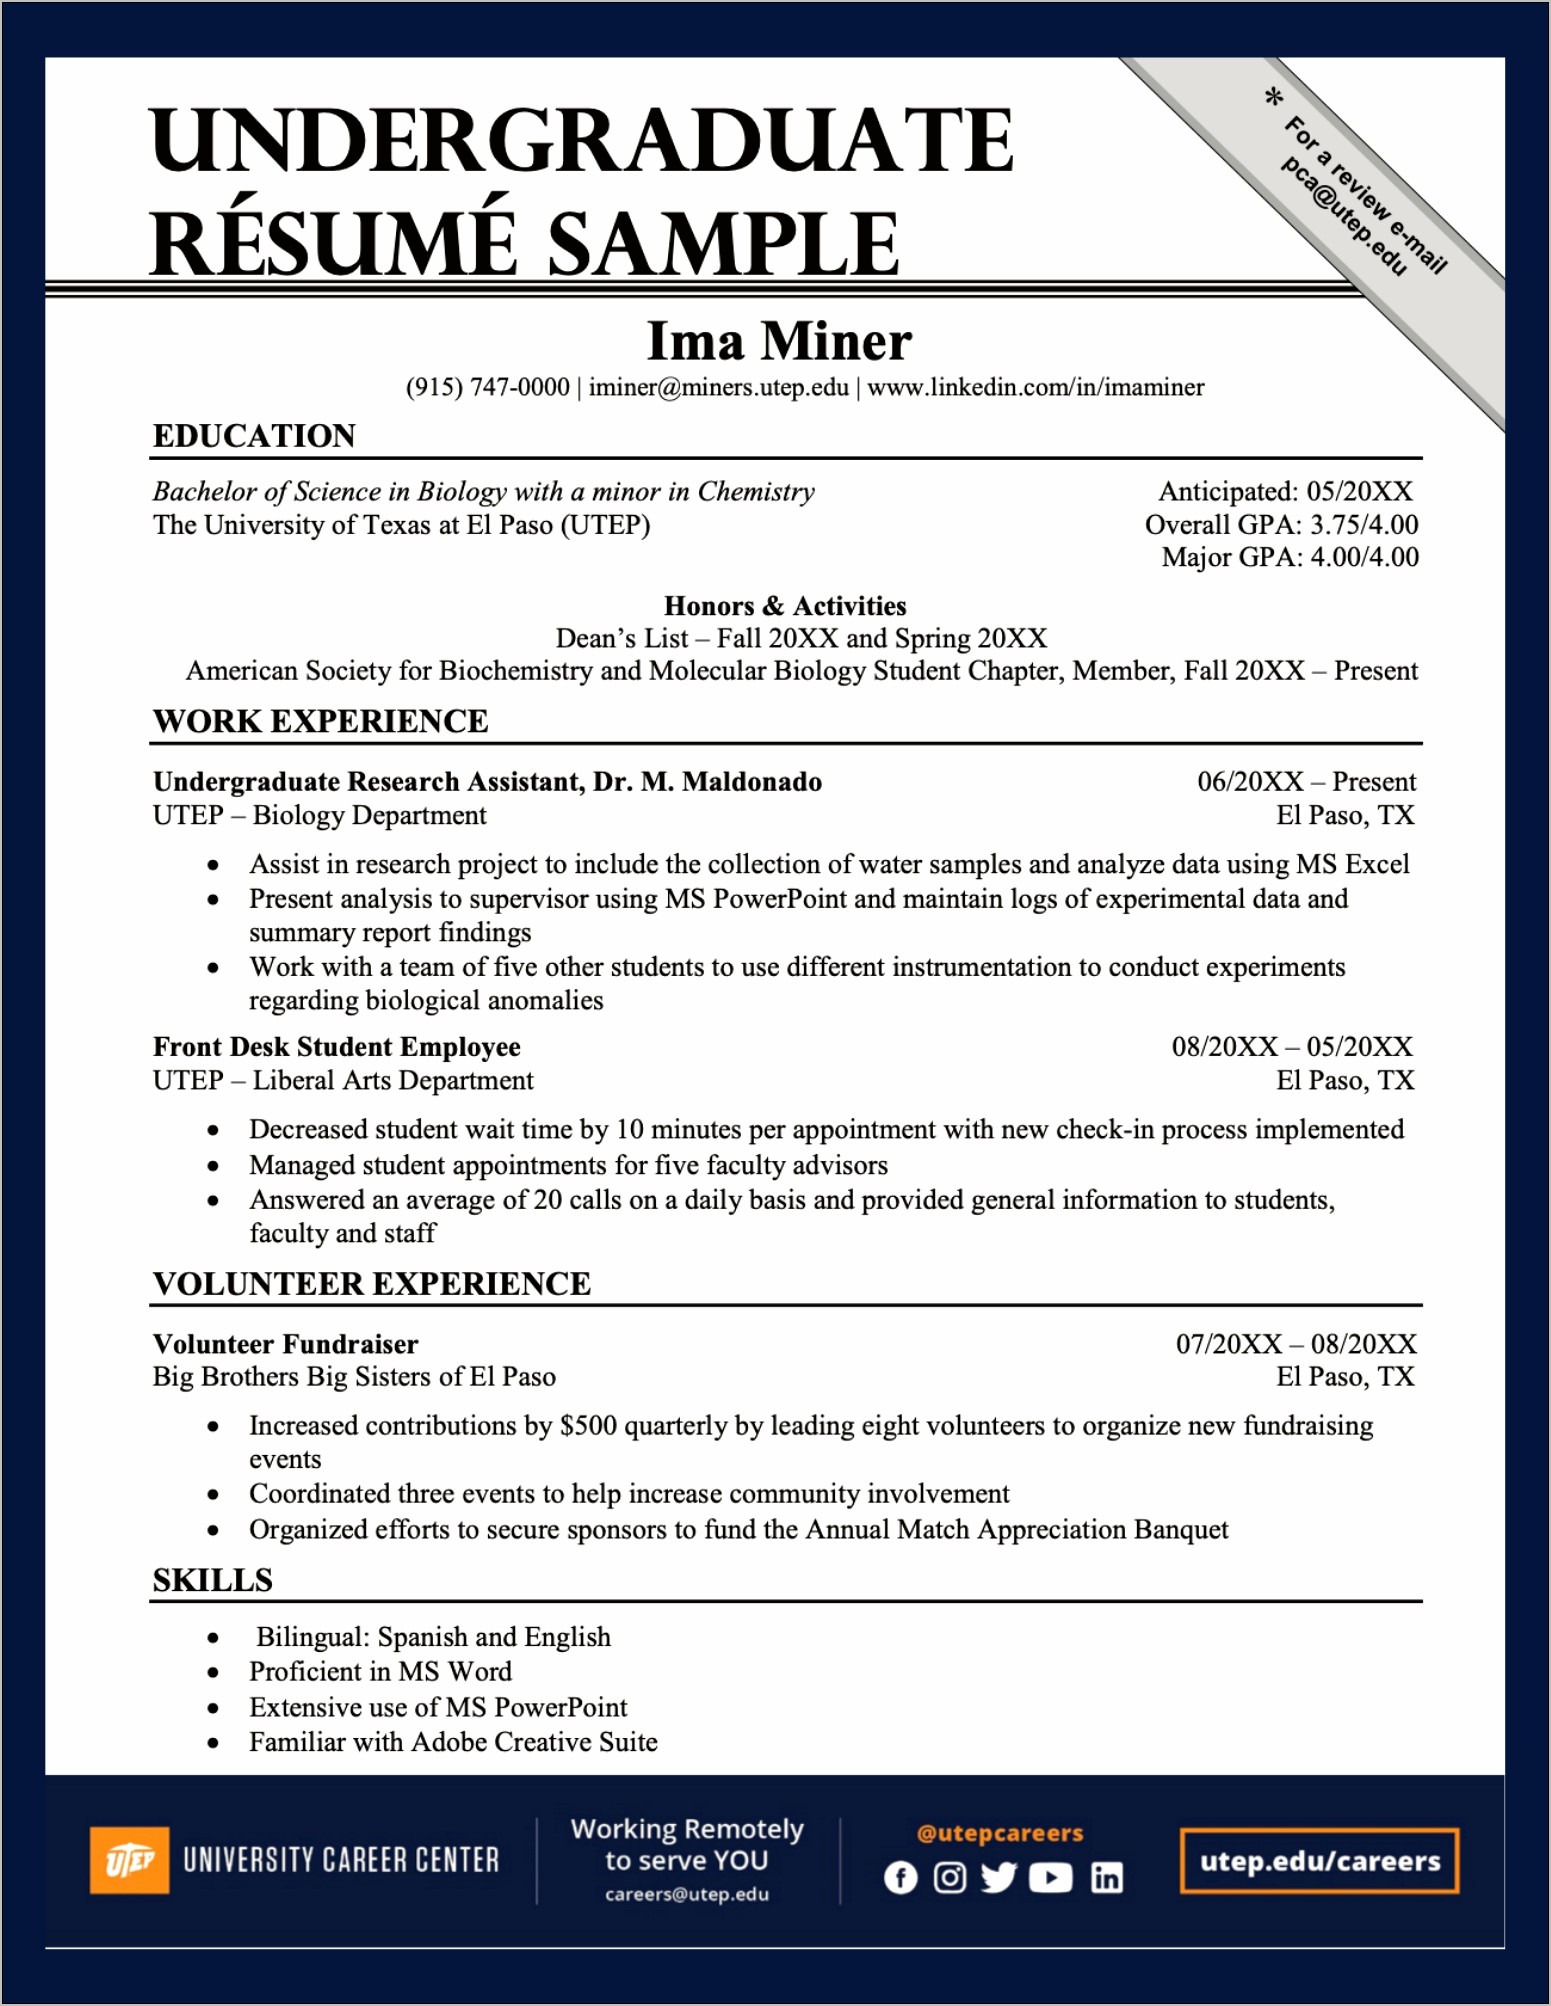 Download Resume Word Format University Career Center